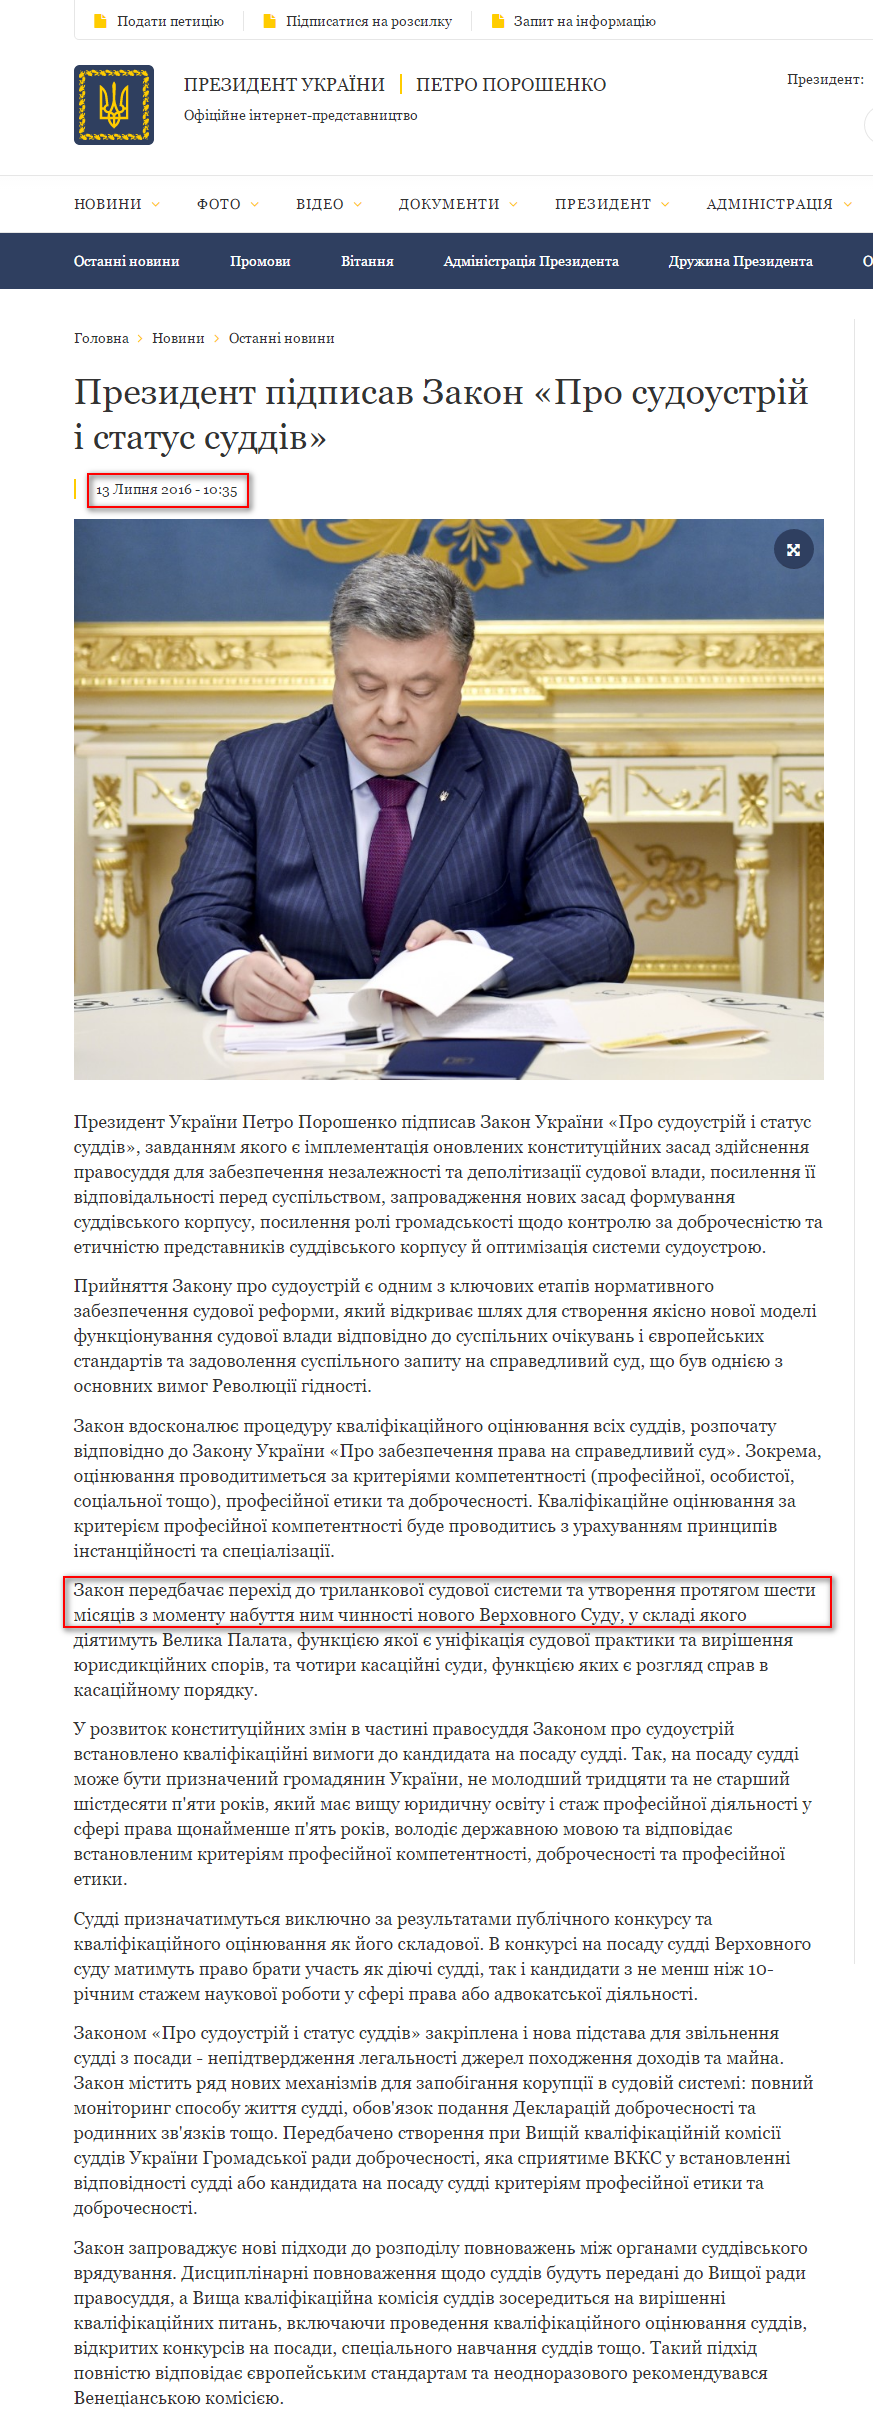 http://www.president.gov.ua/news/prezident-pidpisav-zakon-pro-sudoustrij-i-status-suddiv-37639